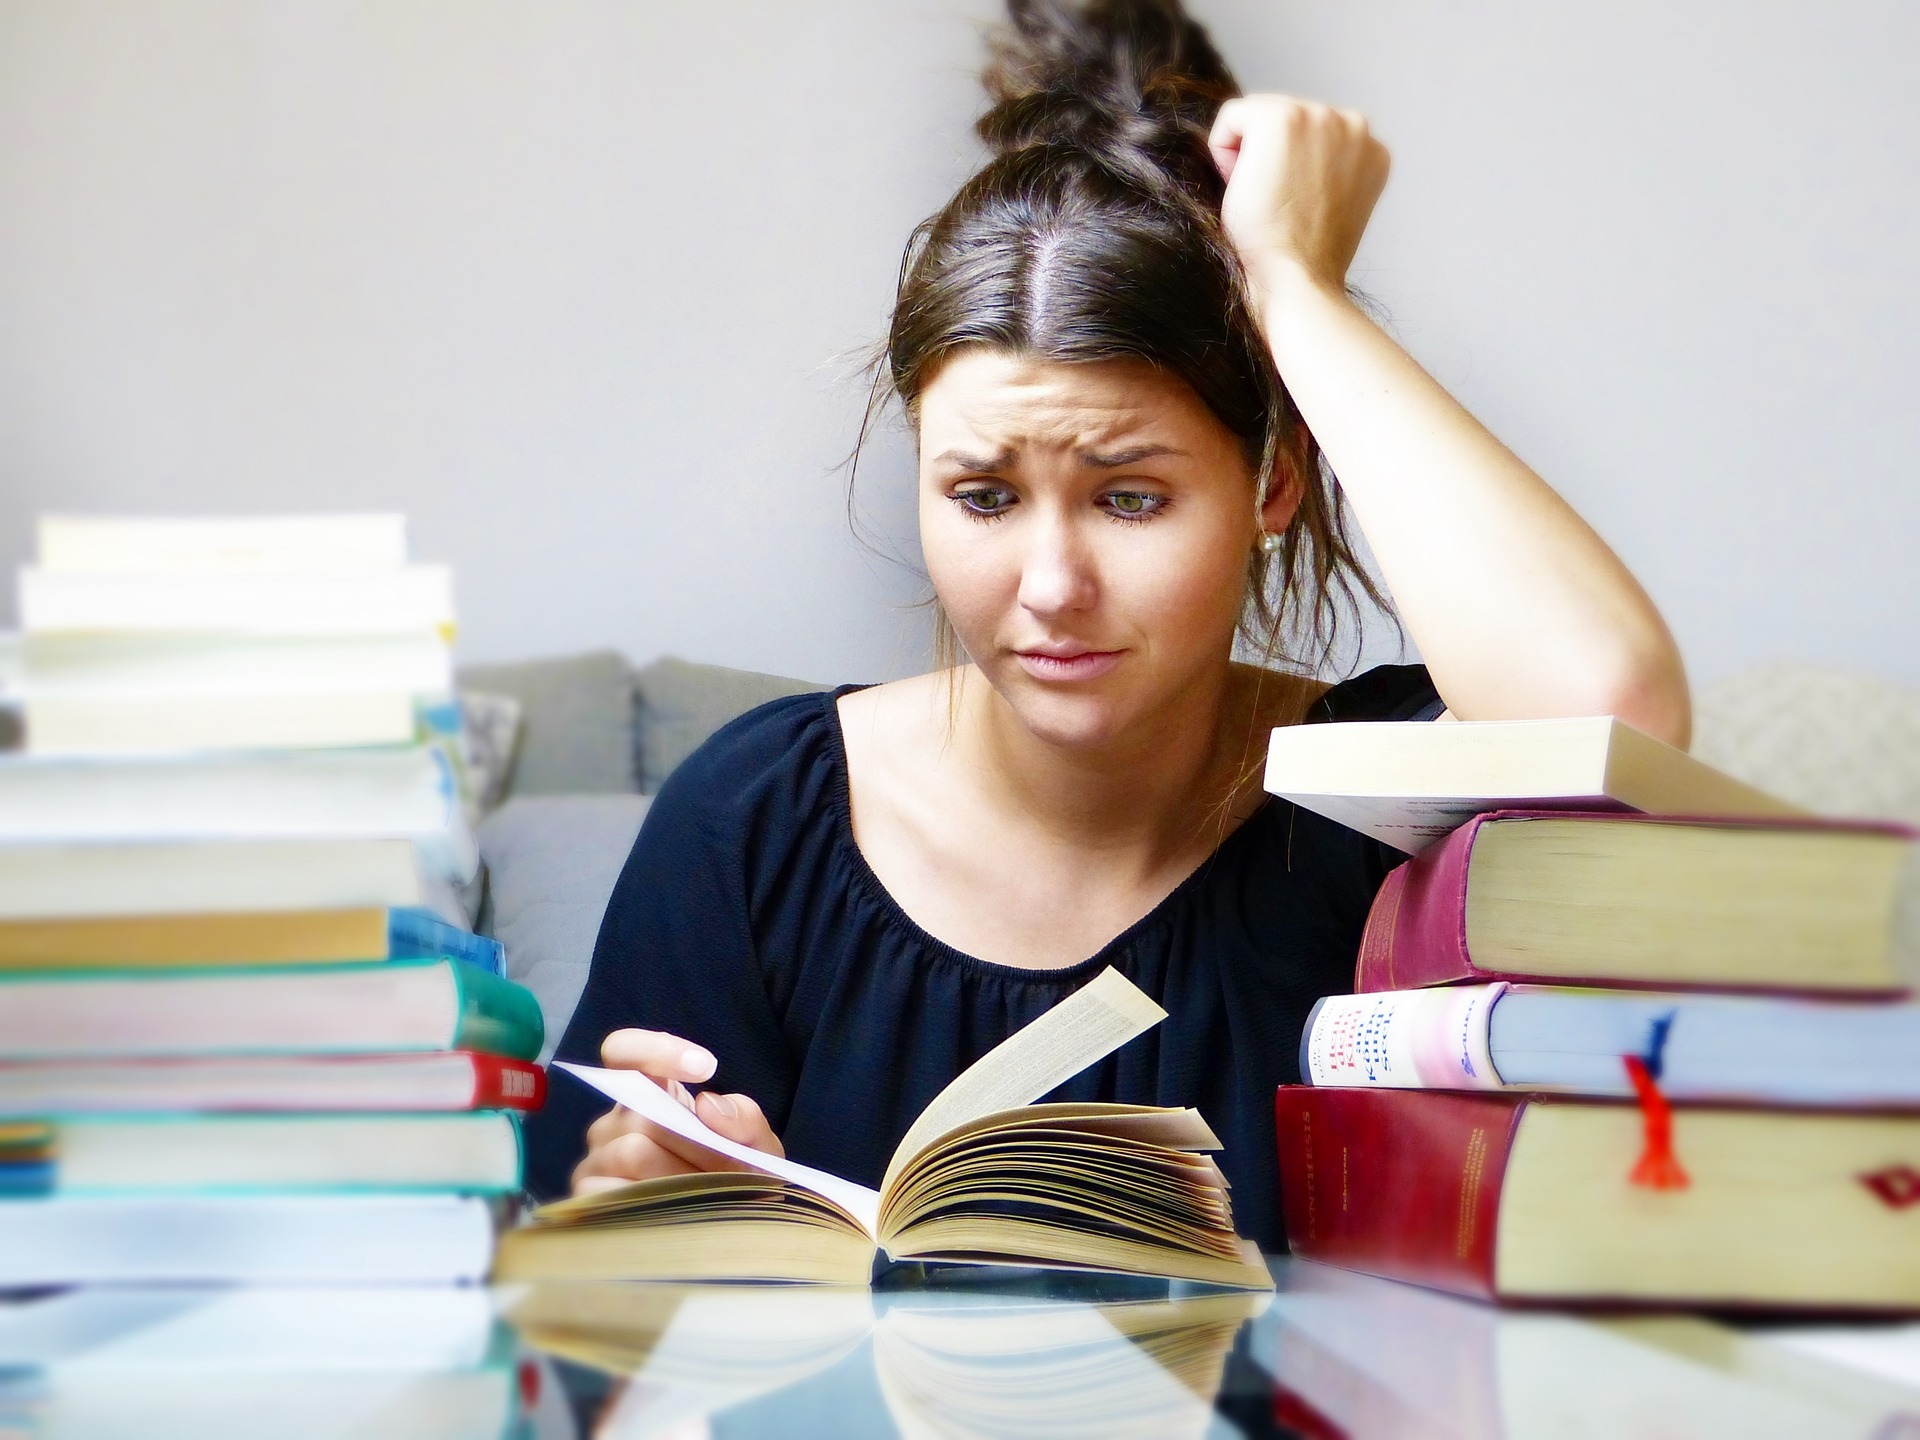 homework causing stress on students